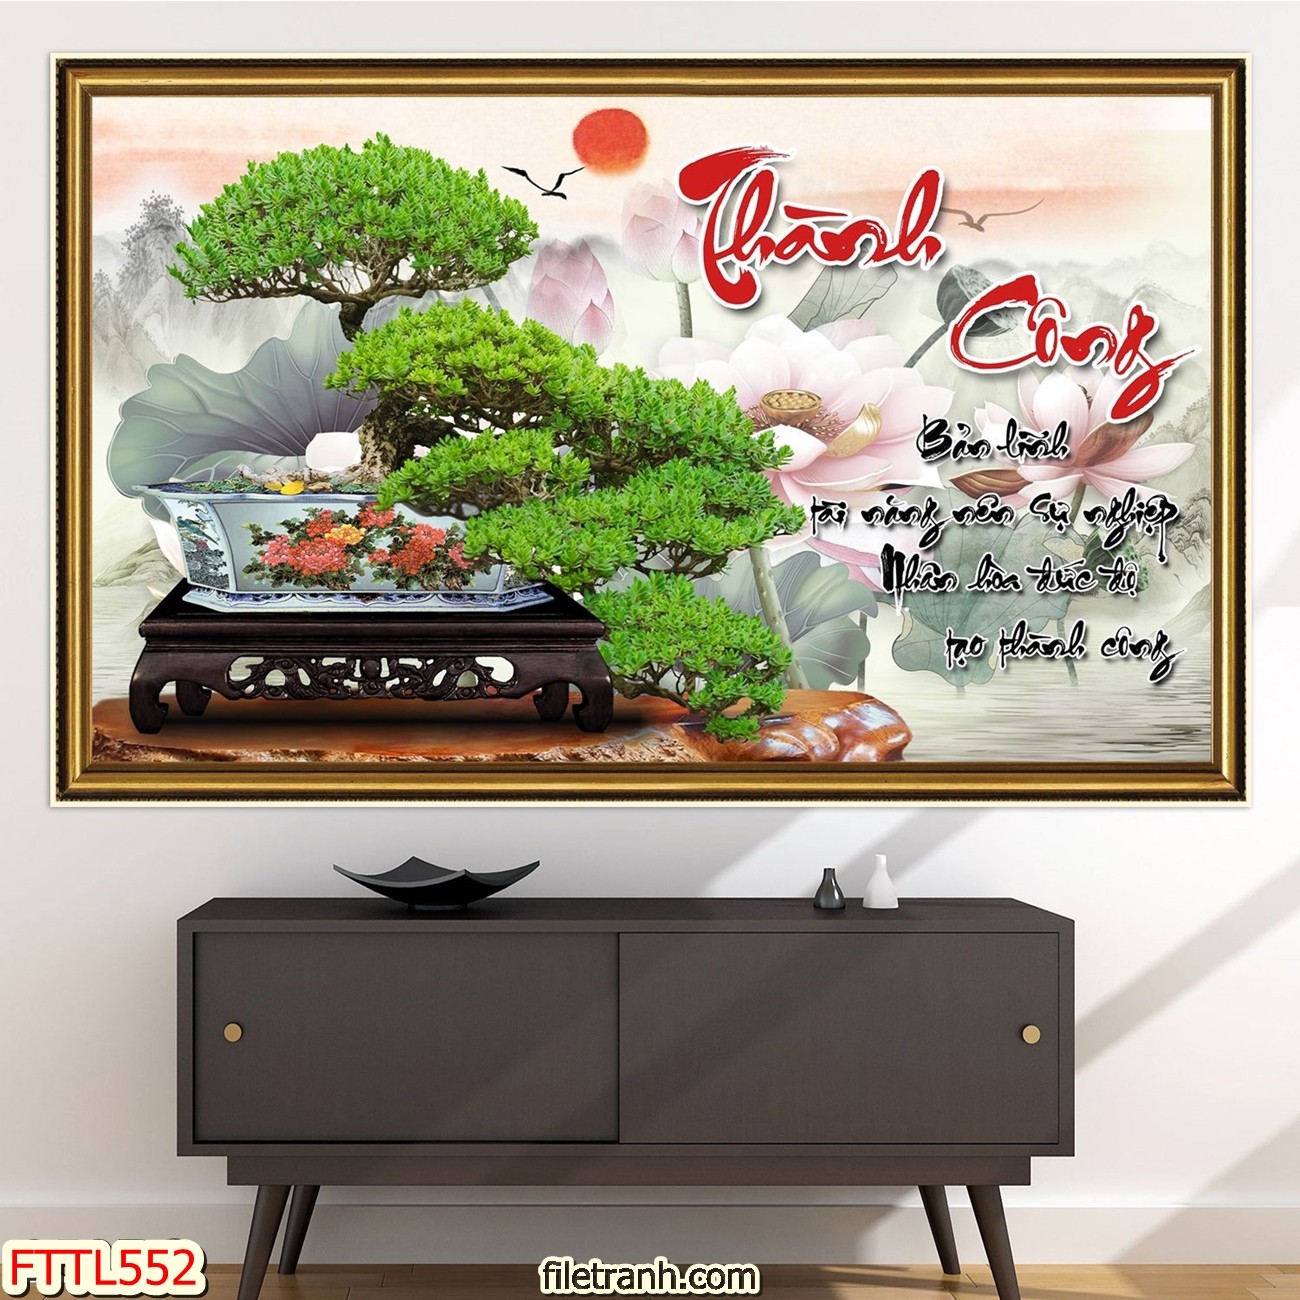 https://filetranh.com/file-tranh-chau-mai-bonsai/file-tranh-chau-mai-bonsai-fttl552.html